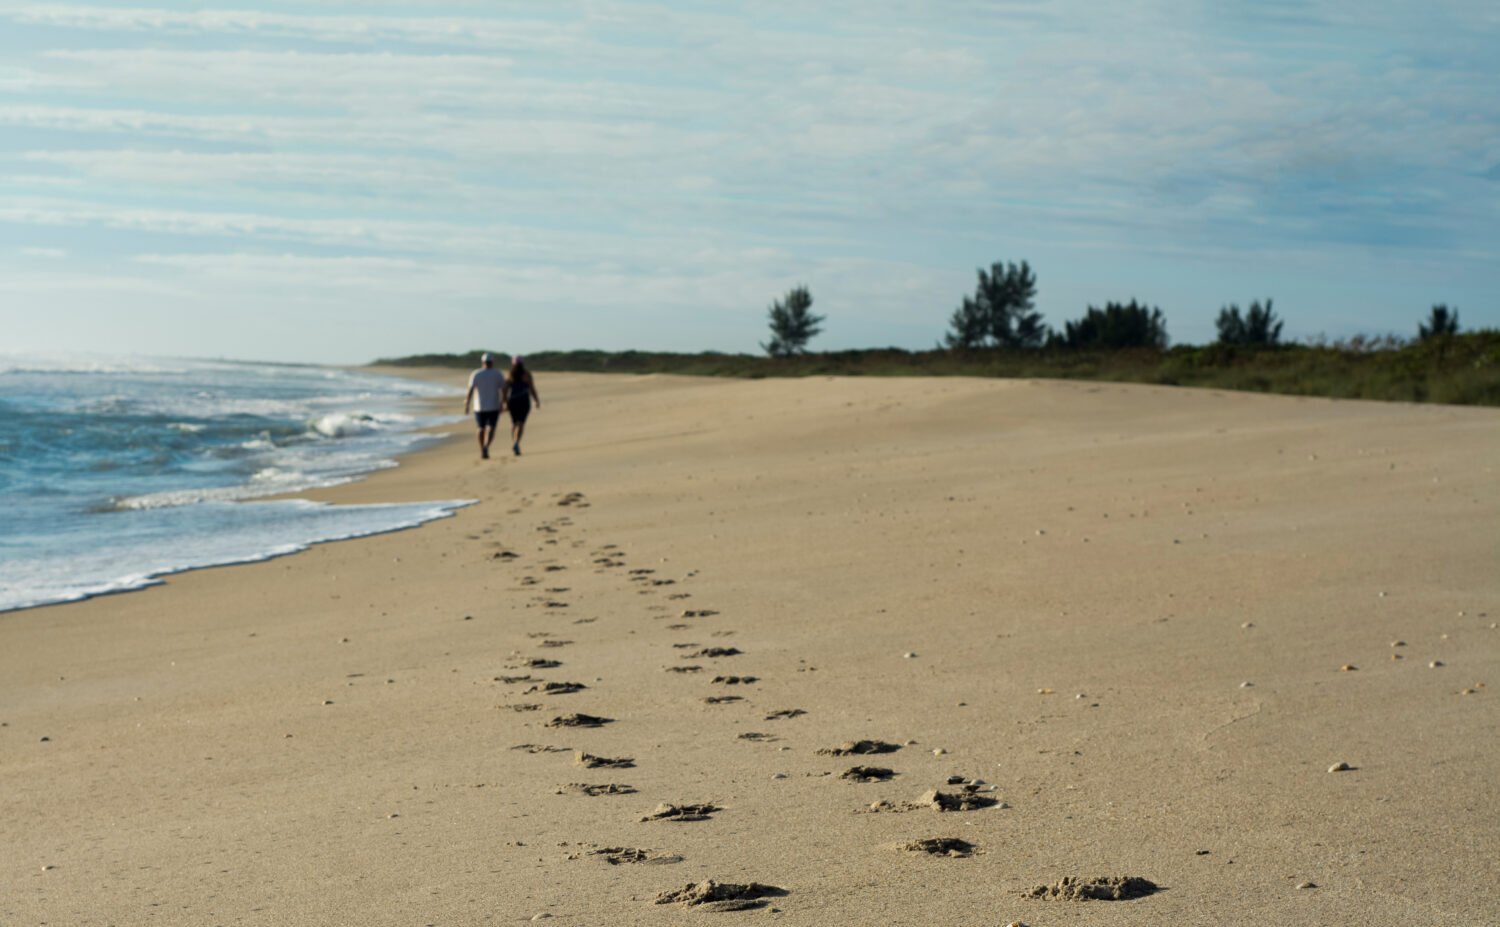 Lovers footprints in sand